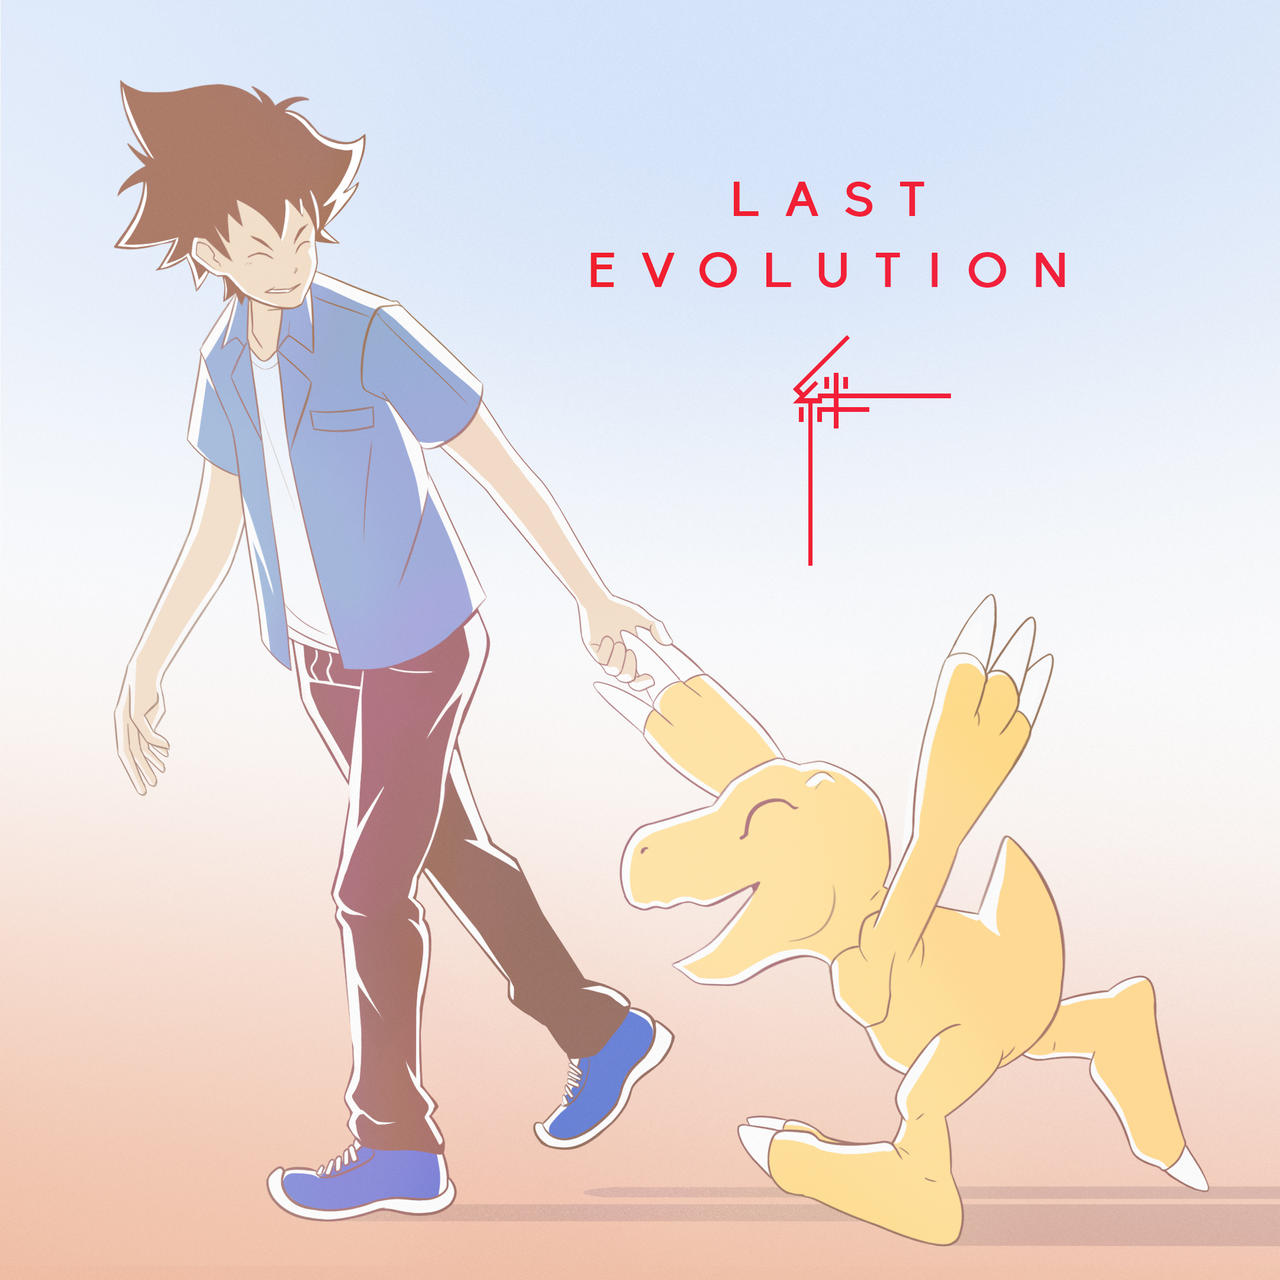 Digimon Adventure: Last Evolution Kizuna is out! : r/digimon